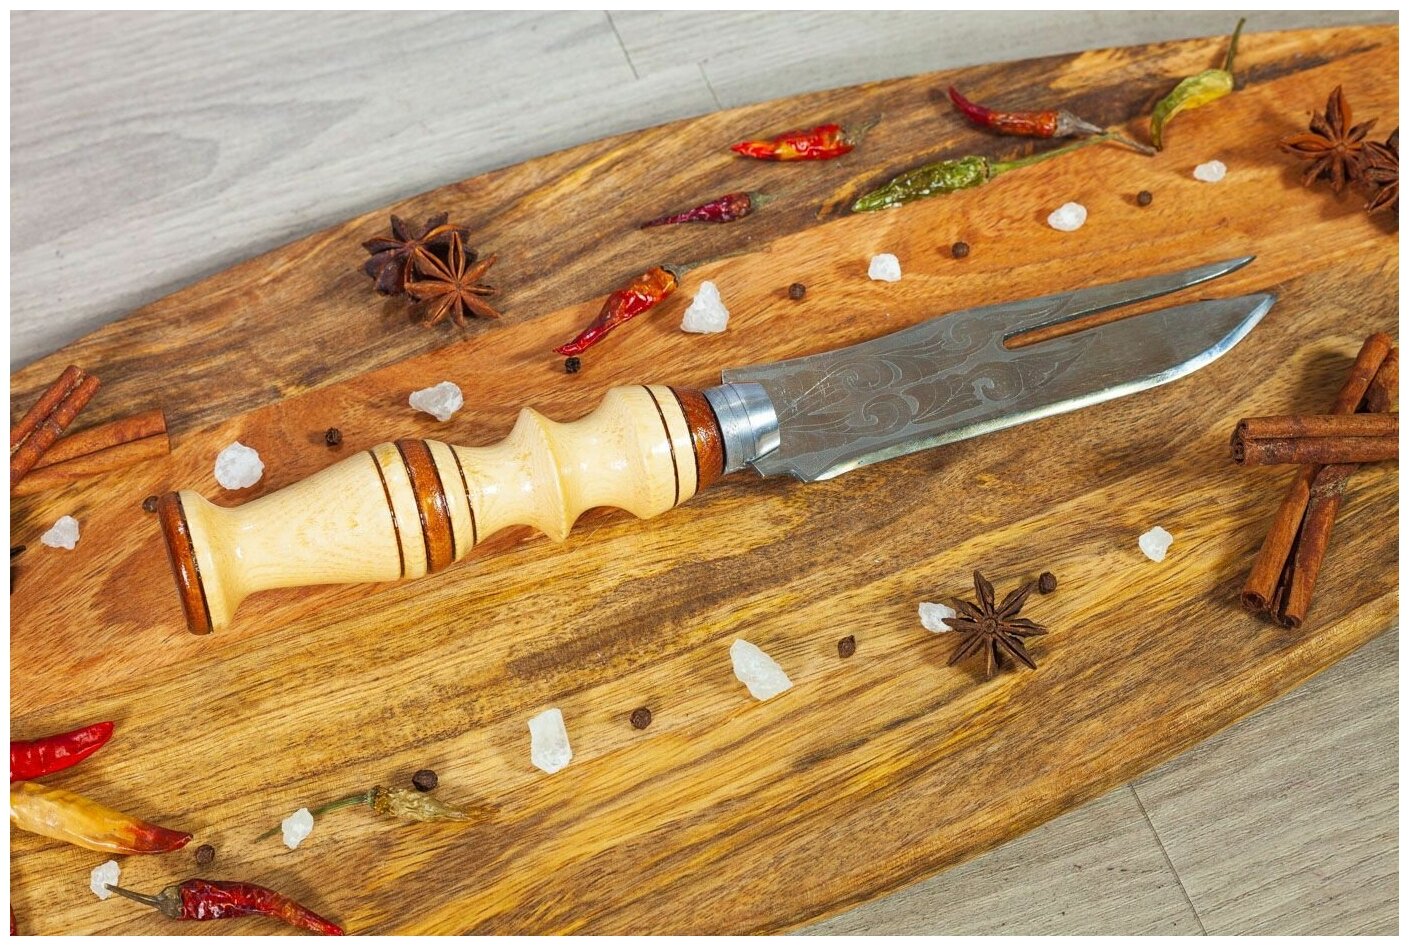 Вилка - нож для снятия мяса с резной рукоятью и гравировкой на лезвии №2 - фотография № 3